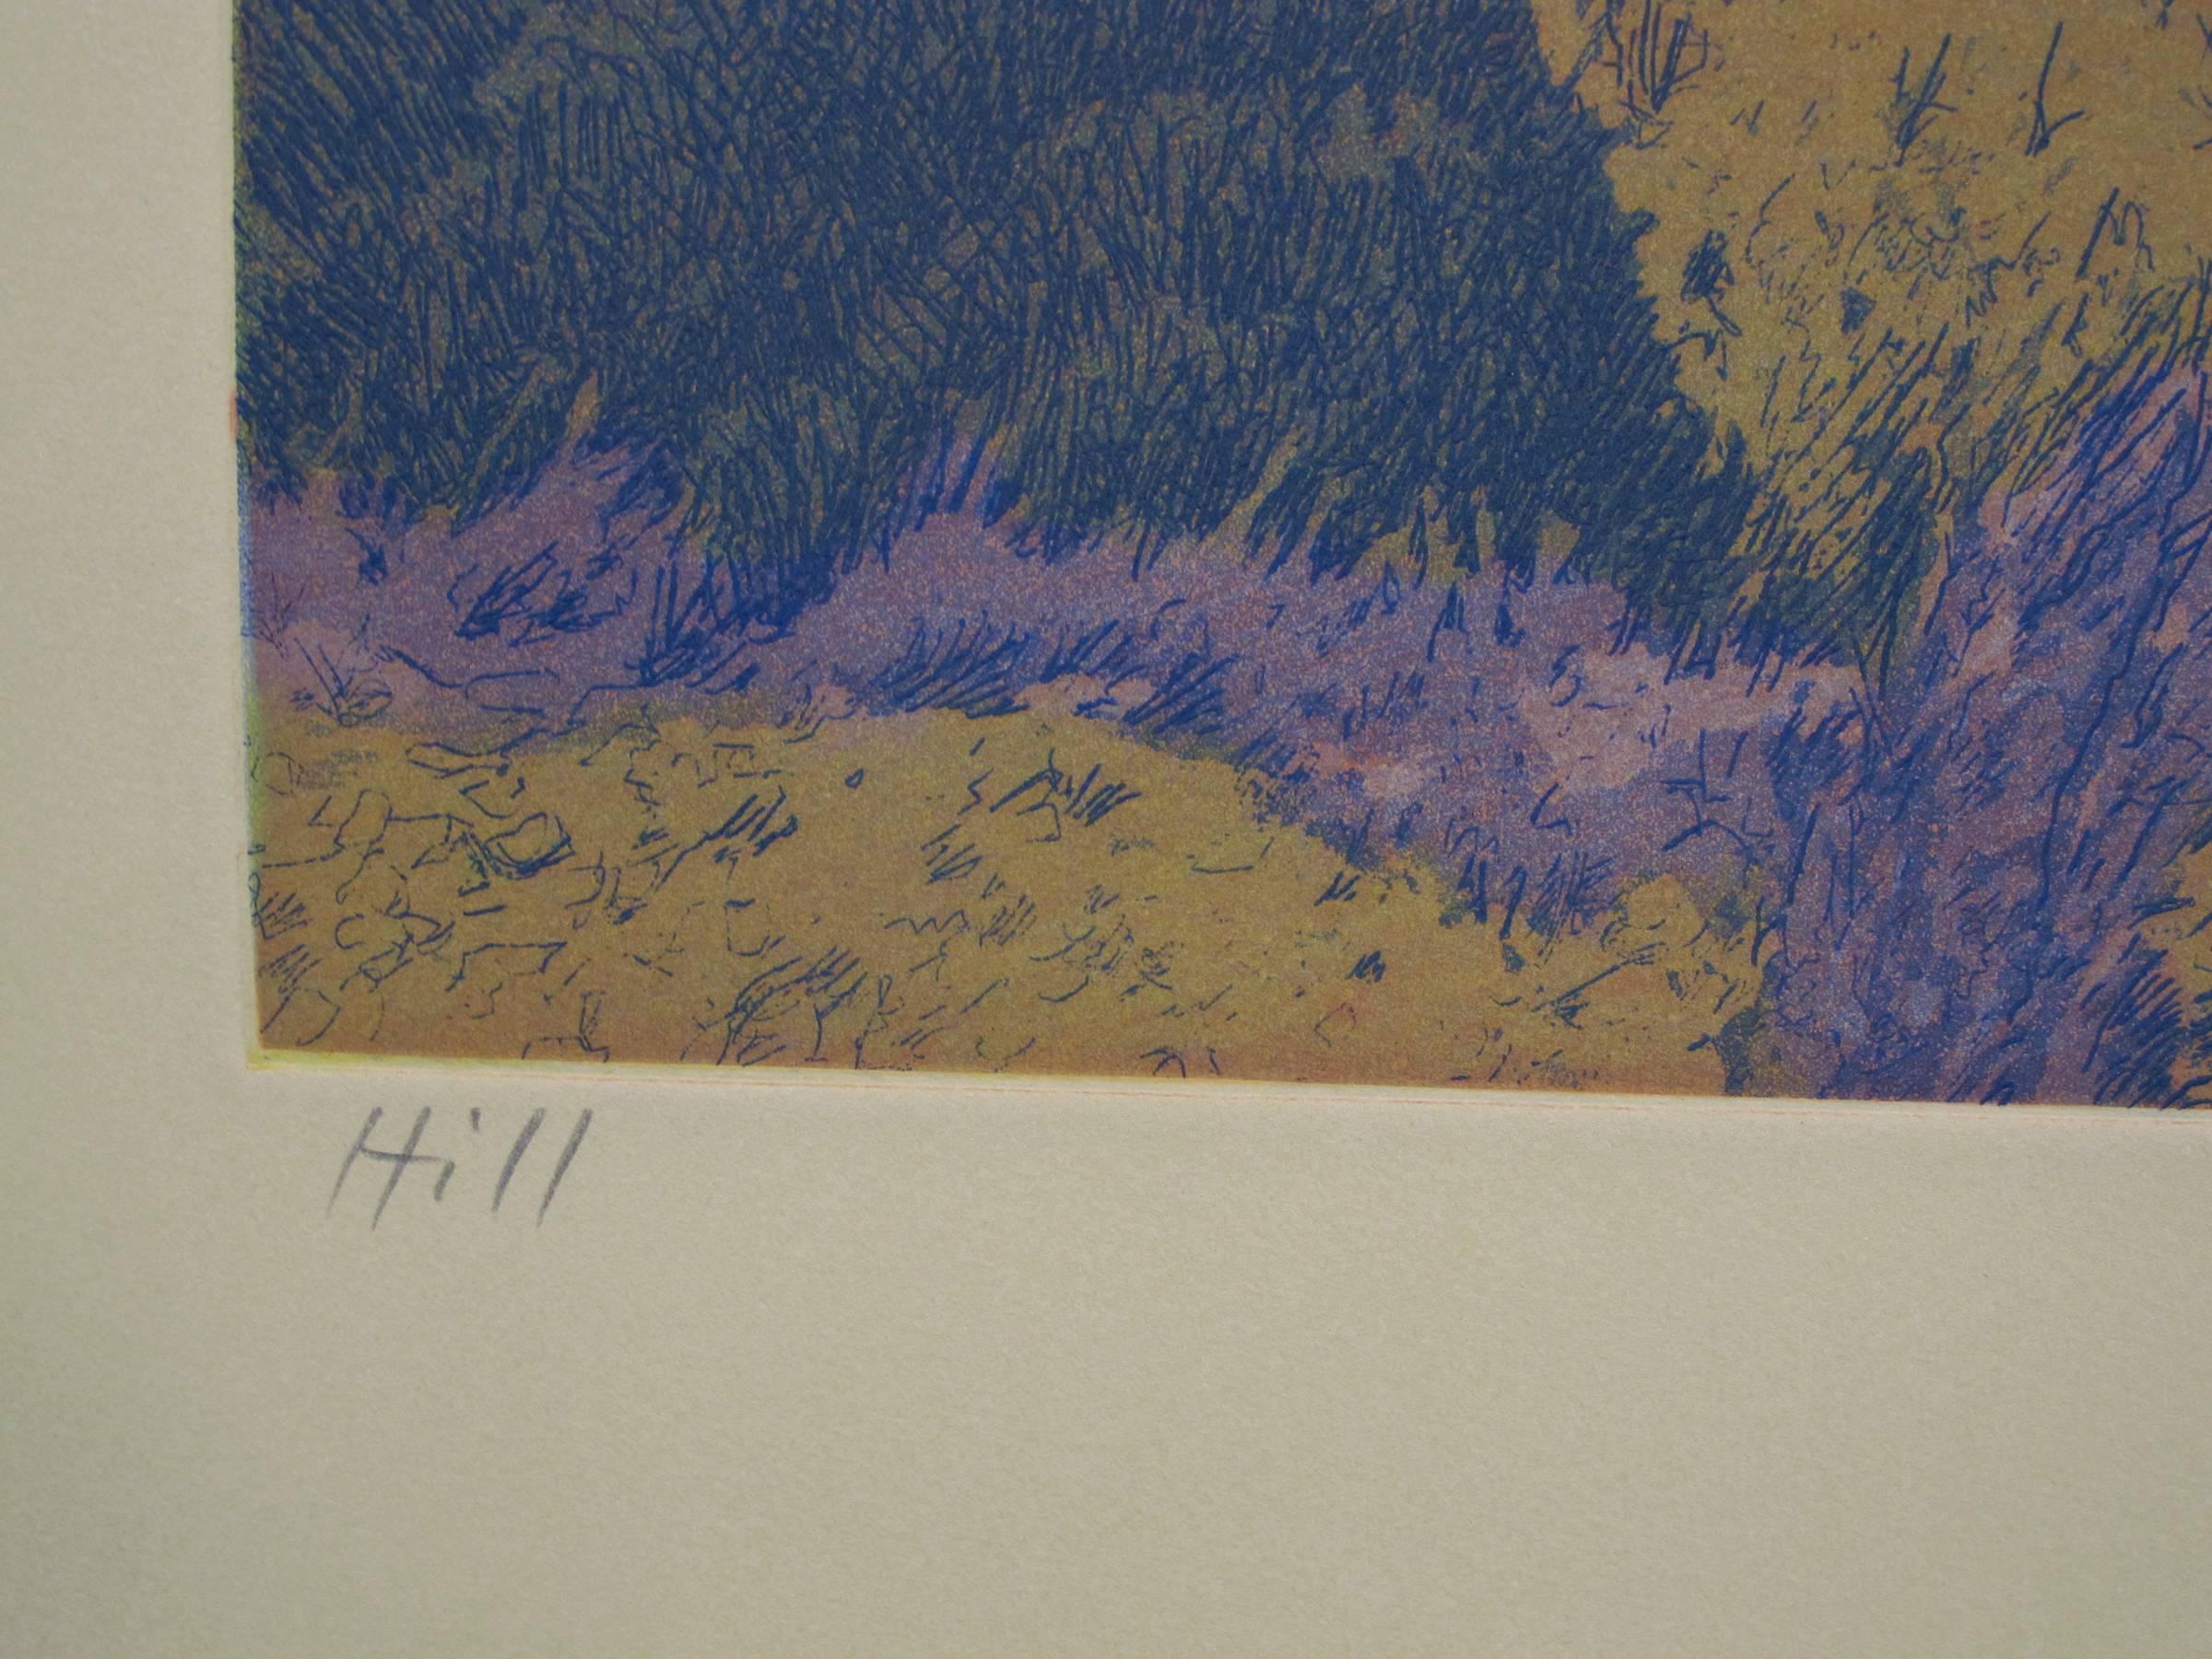 Hill - Contemporary Print by John Hogan